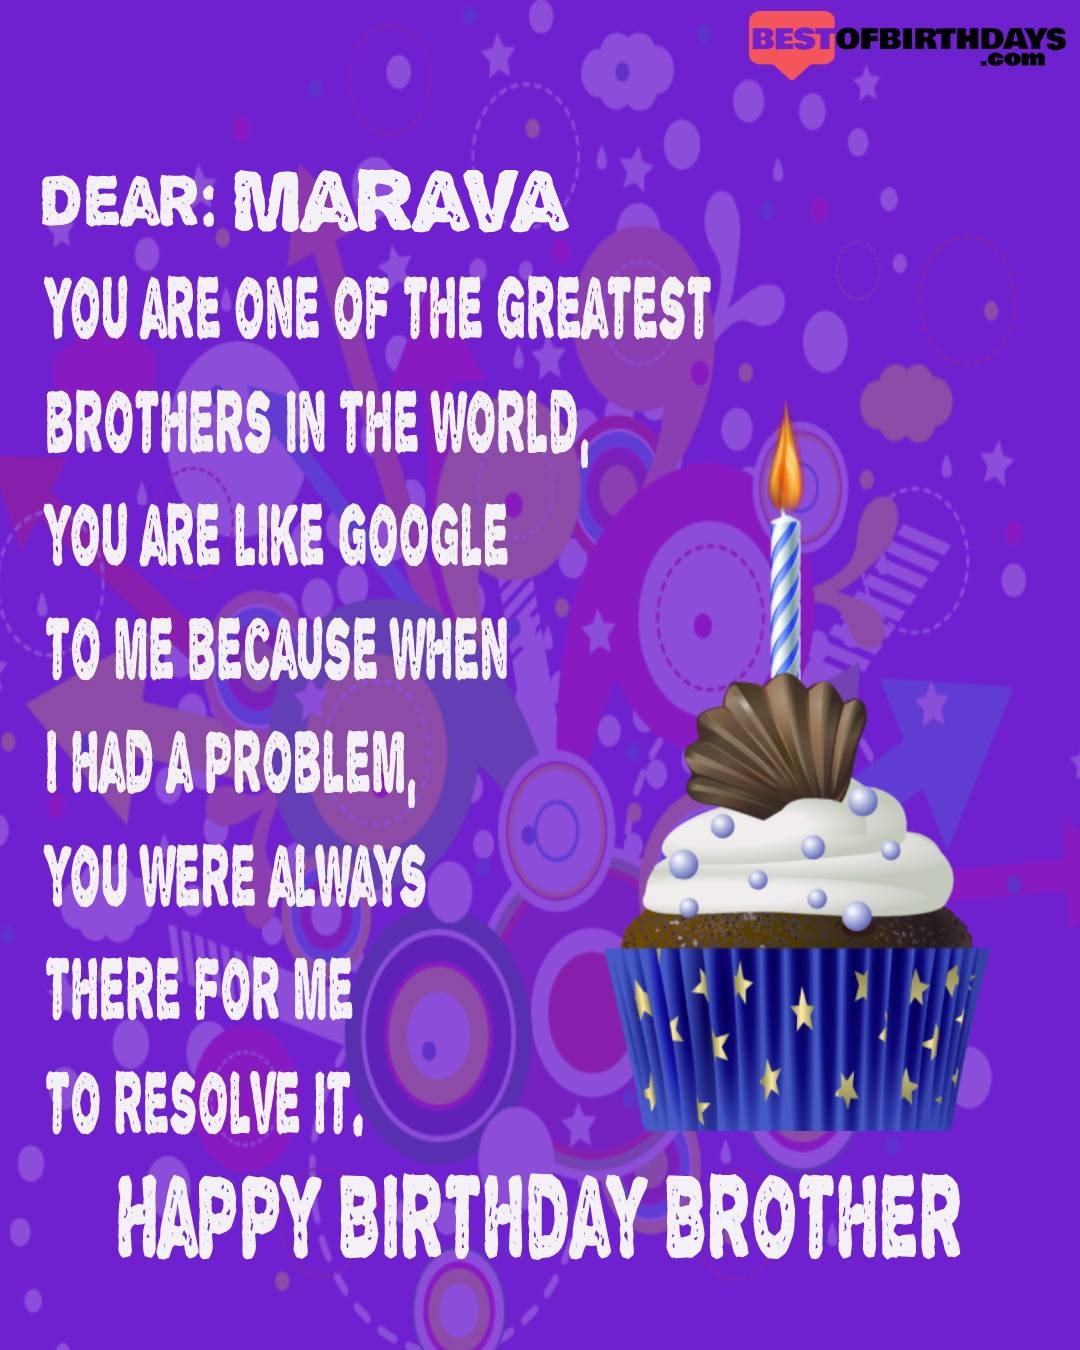 Happy birthday marava bhai brother bro